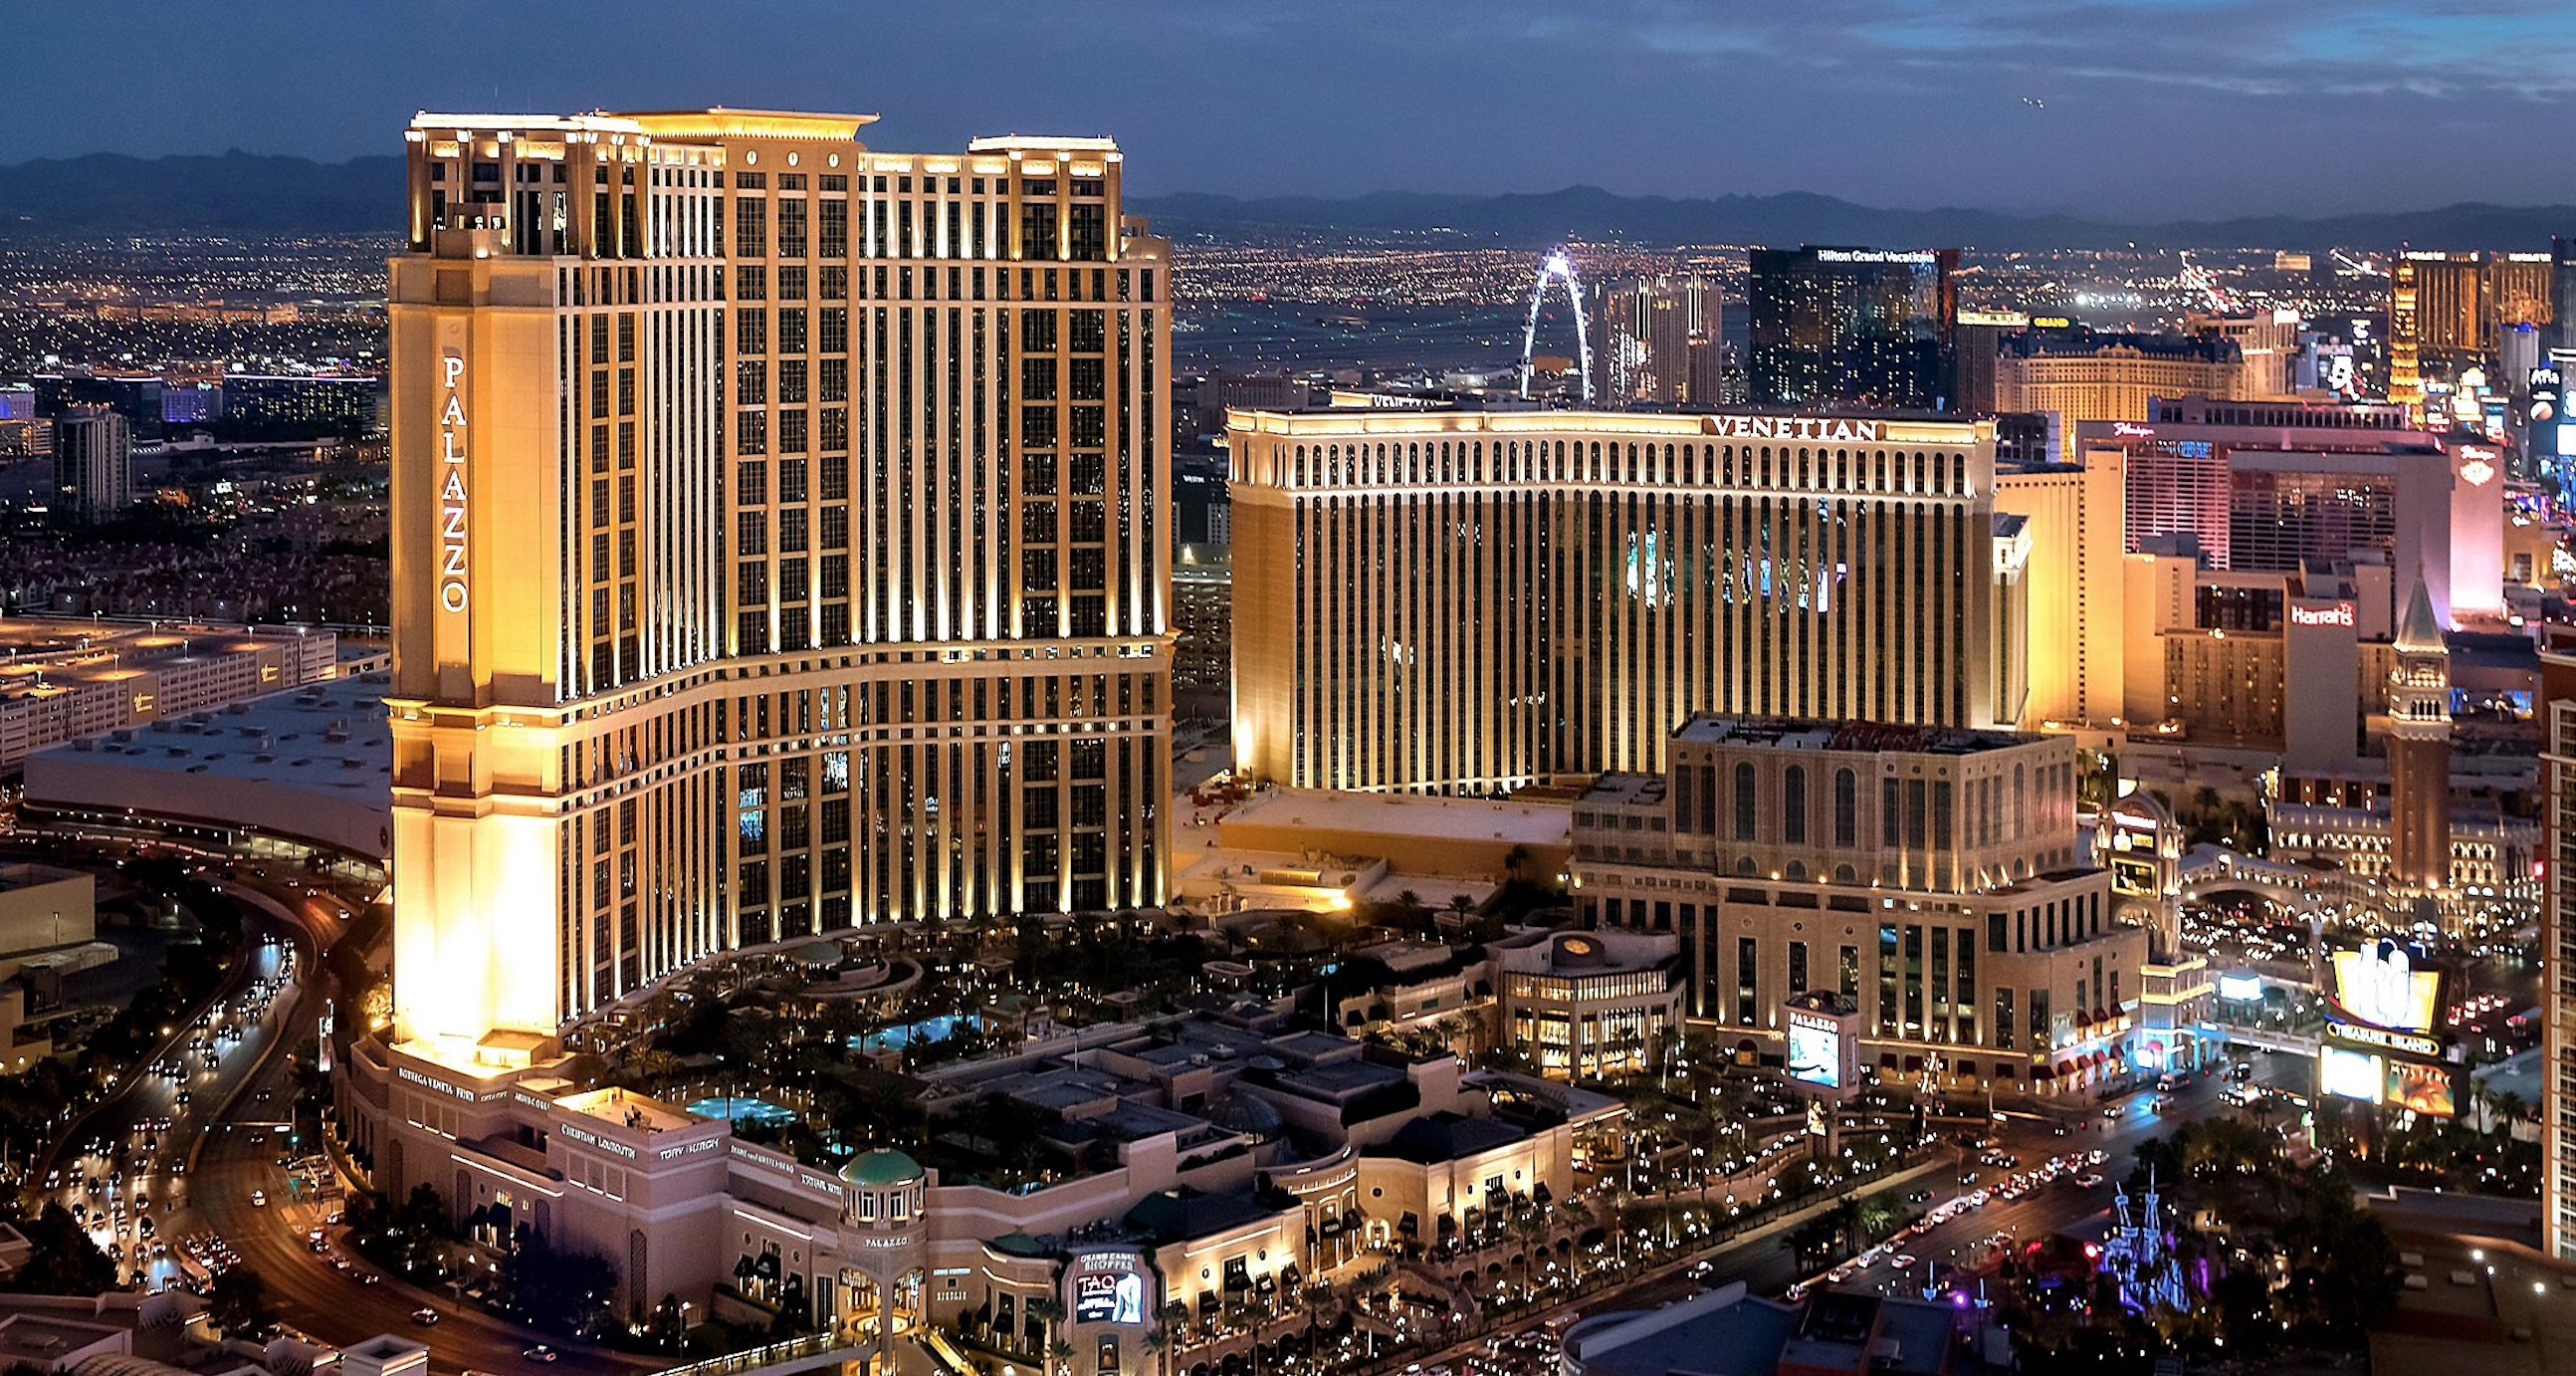 Las Vegas MGM to Temporarily Close All Casinos, Hotels Due to Coronavirus